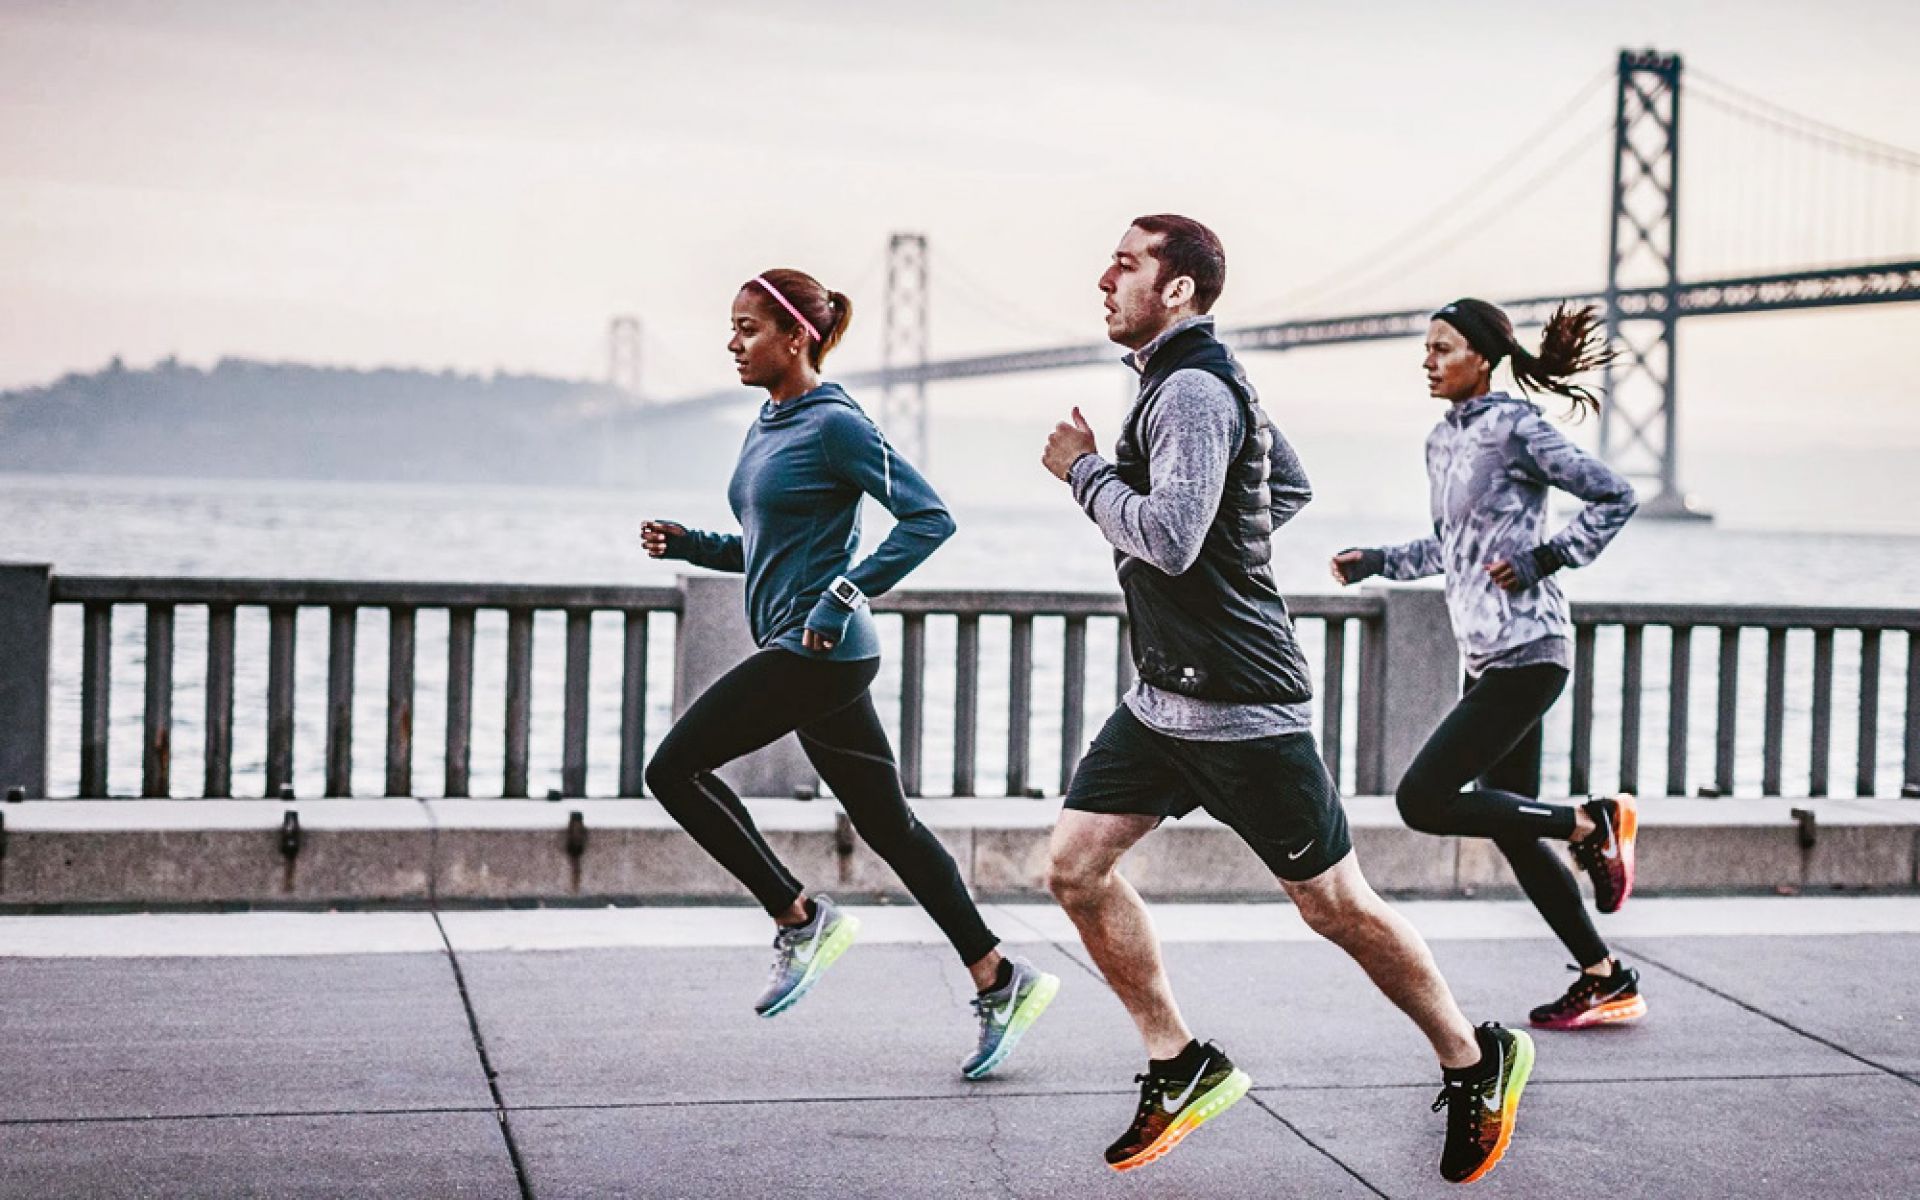 Step people. Nike Running. Nike Running бег. Занятие спортом. Стильный спортивный образ.